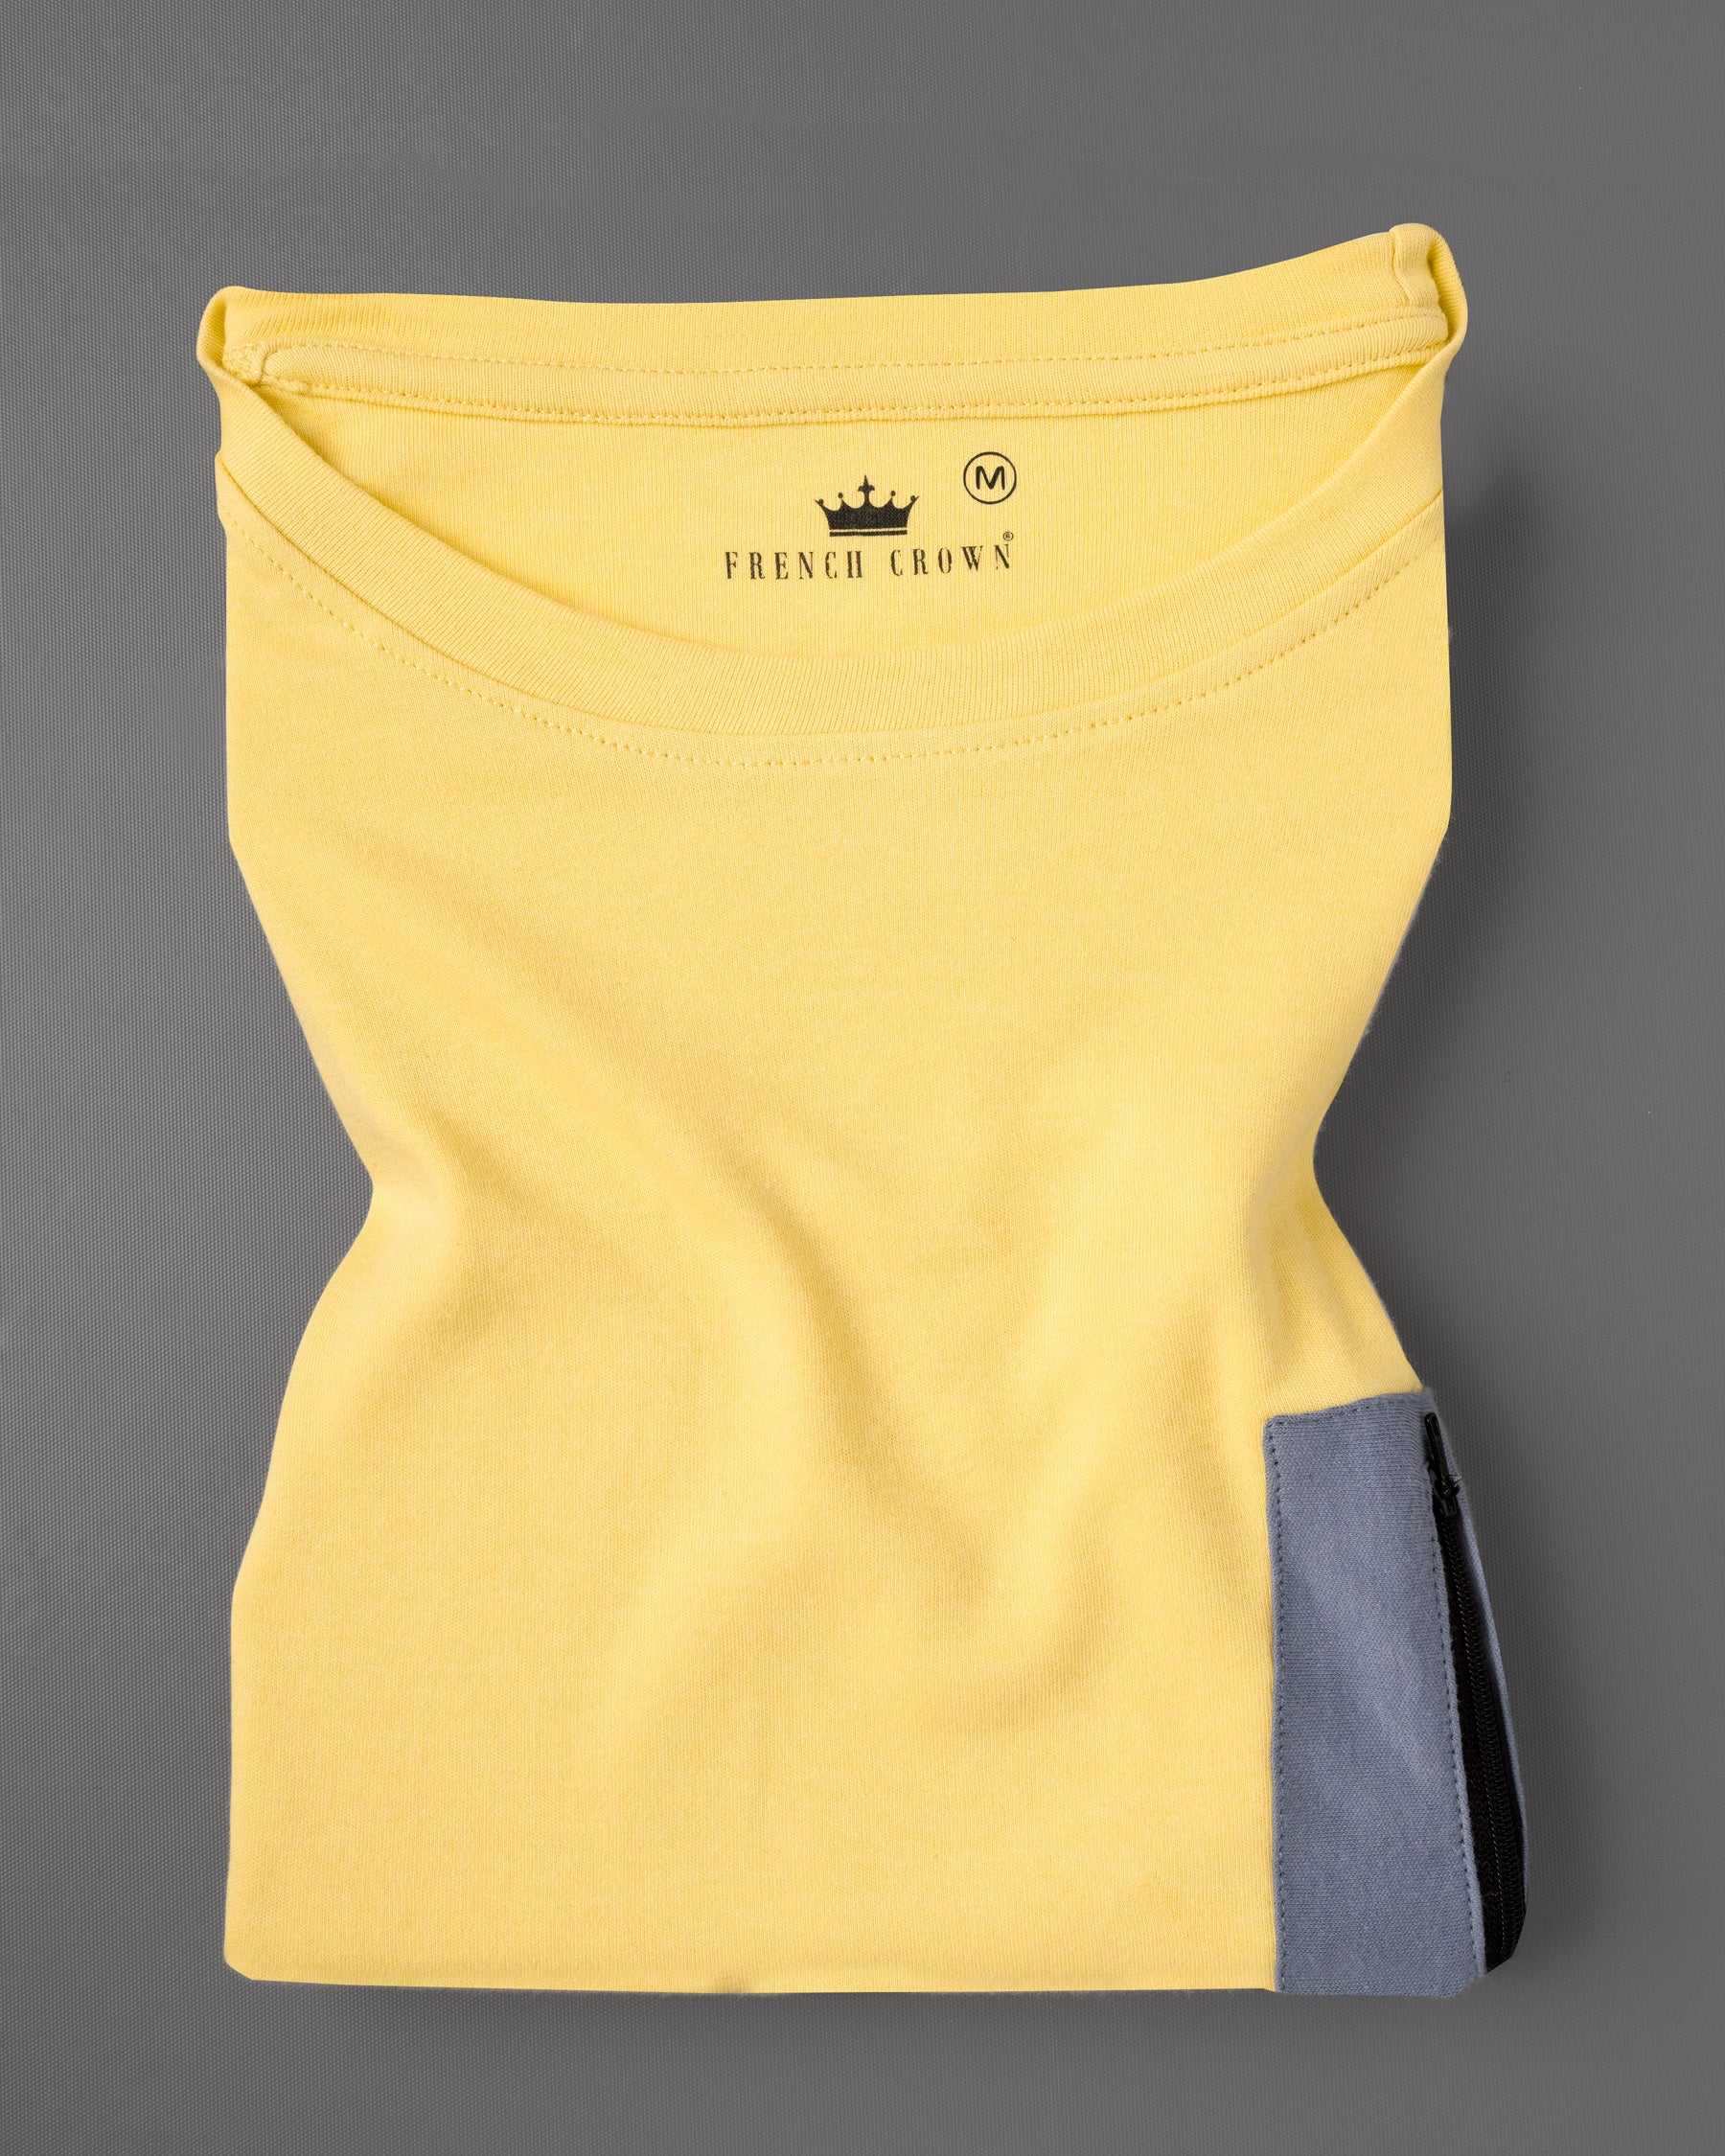 Sweet Corn Yellow with zipper pocket heavyweight premium cotton winter T-shirt TS427-S, TS427-M, TS427-L, TS427-XL, TS427-XXL, TS427-3XL, TS427-4XL